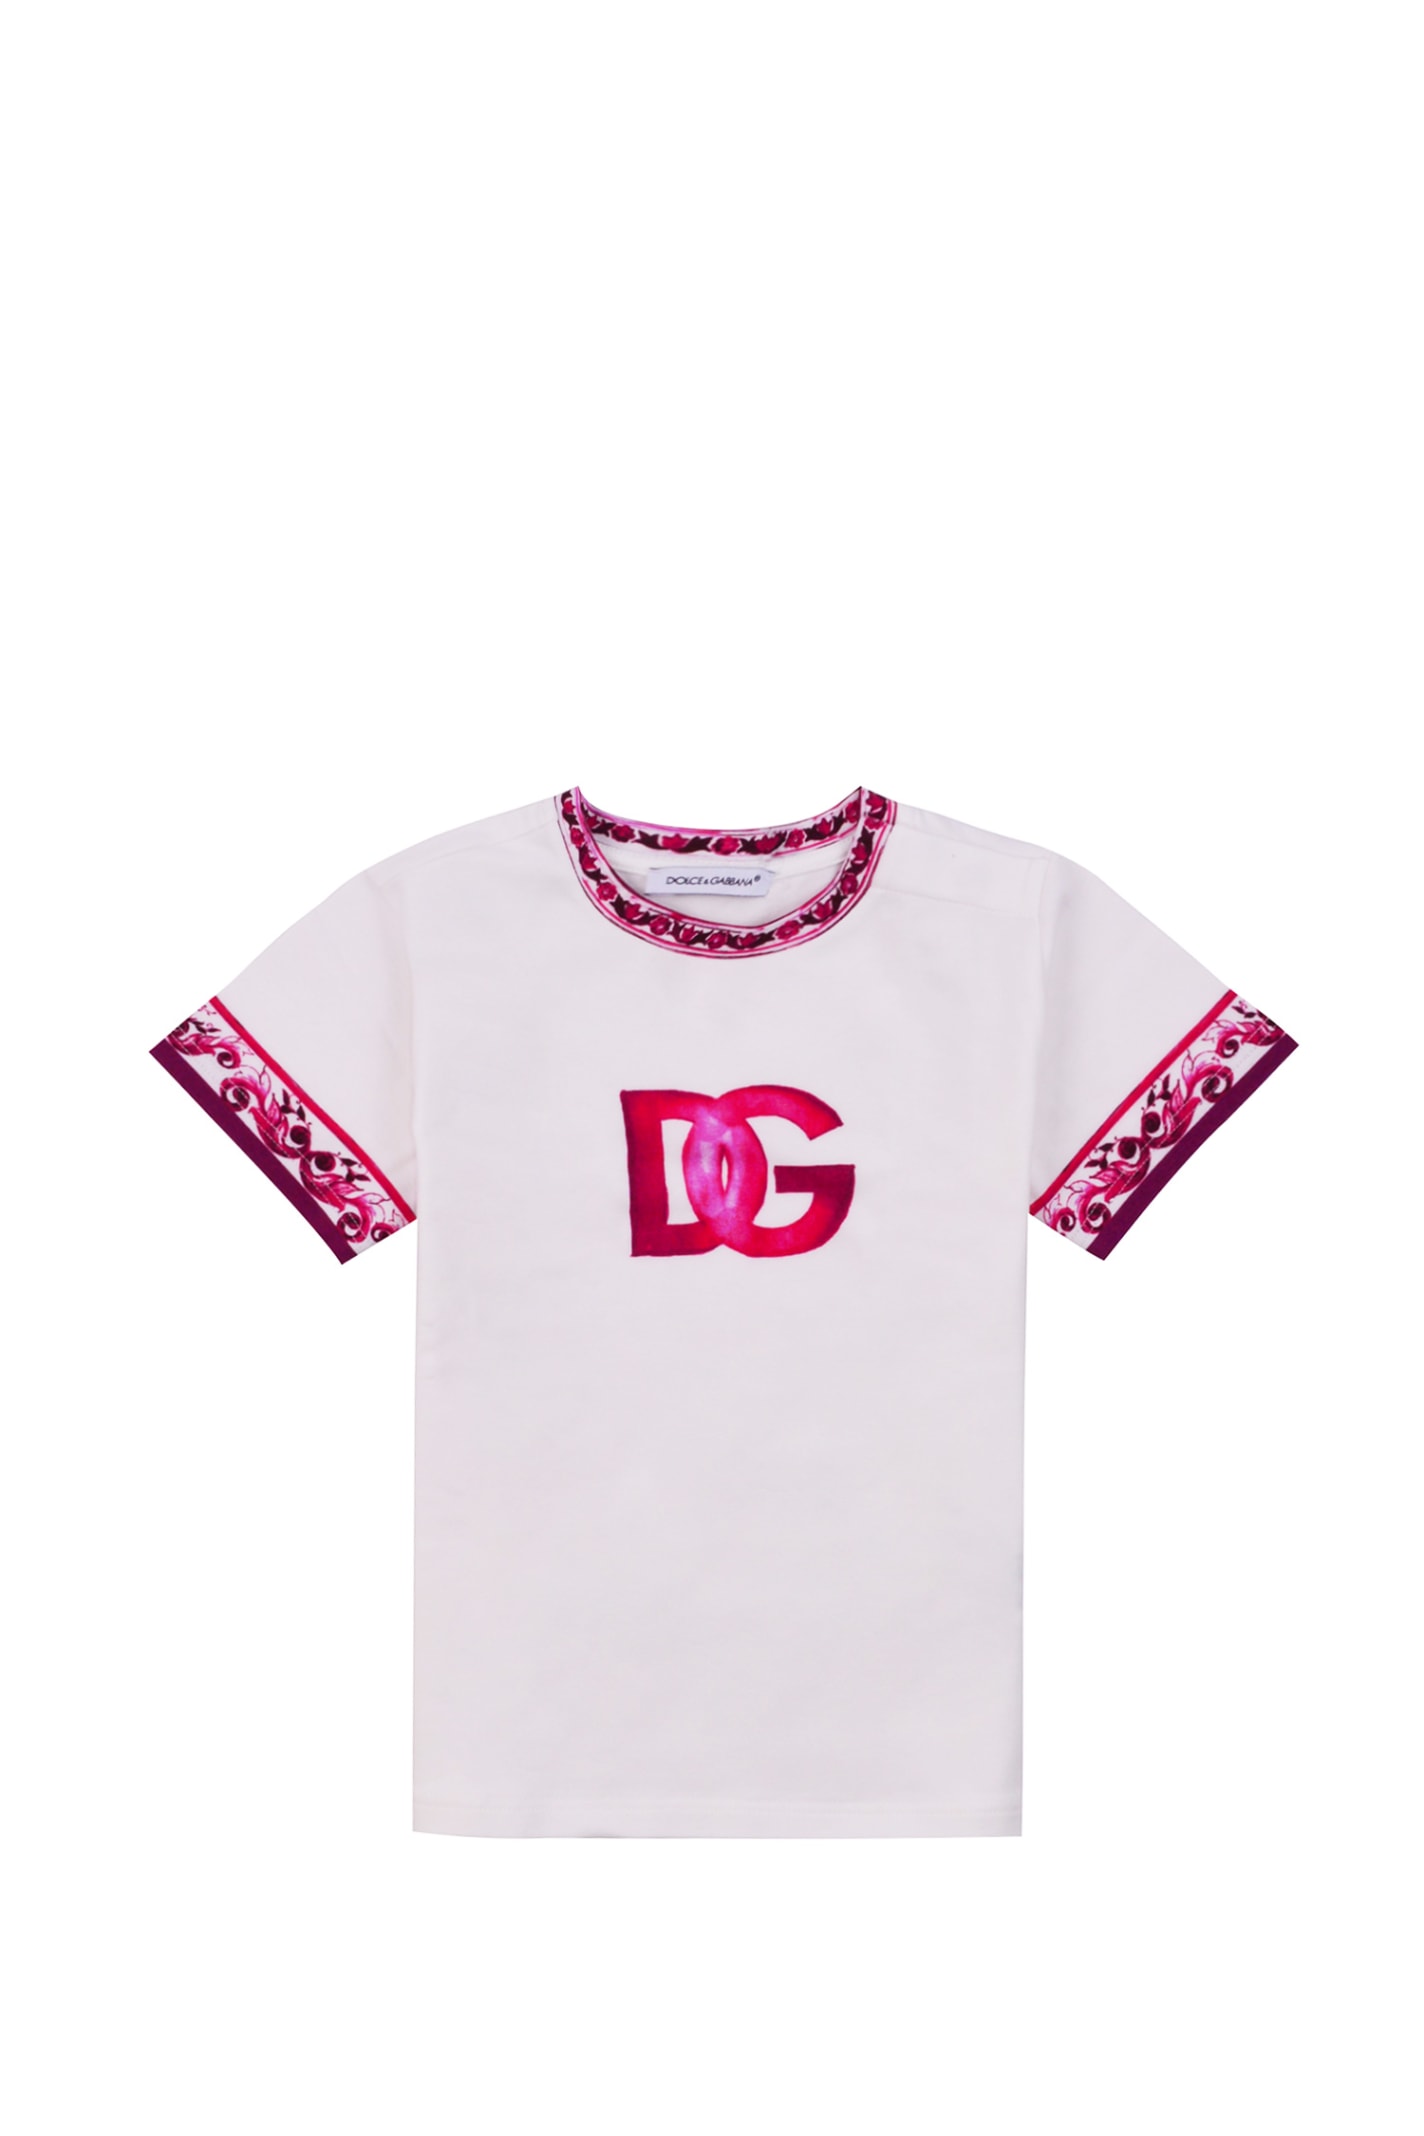 Dolce & Gabbana Babies' Printed T-shirt In White